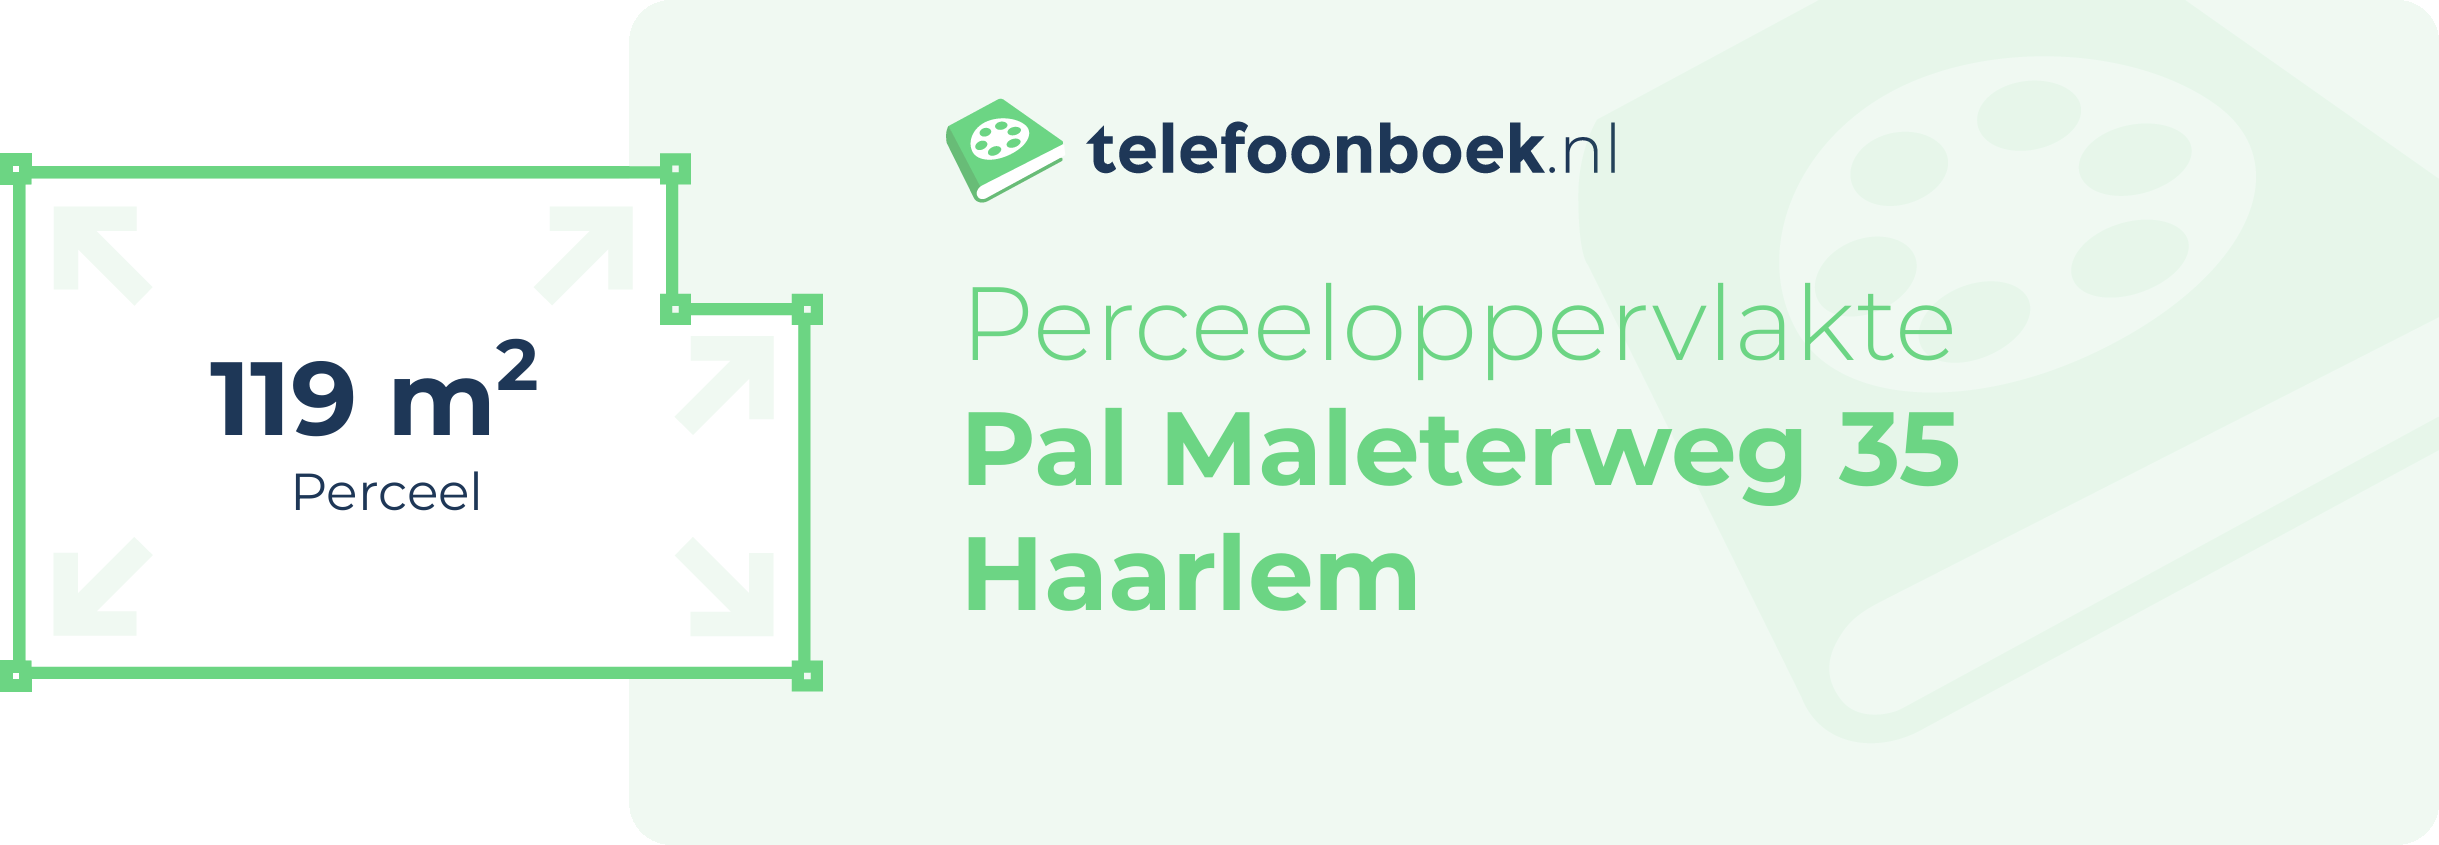 Perceeloppervlakte Pal Maleterweg 35 Haarlem